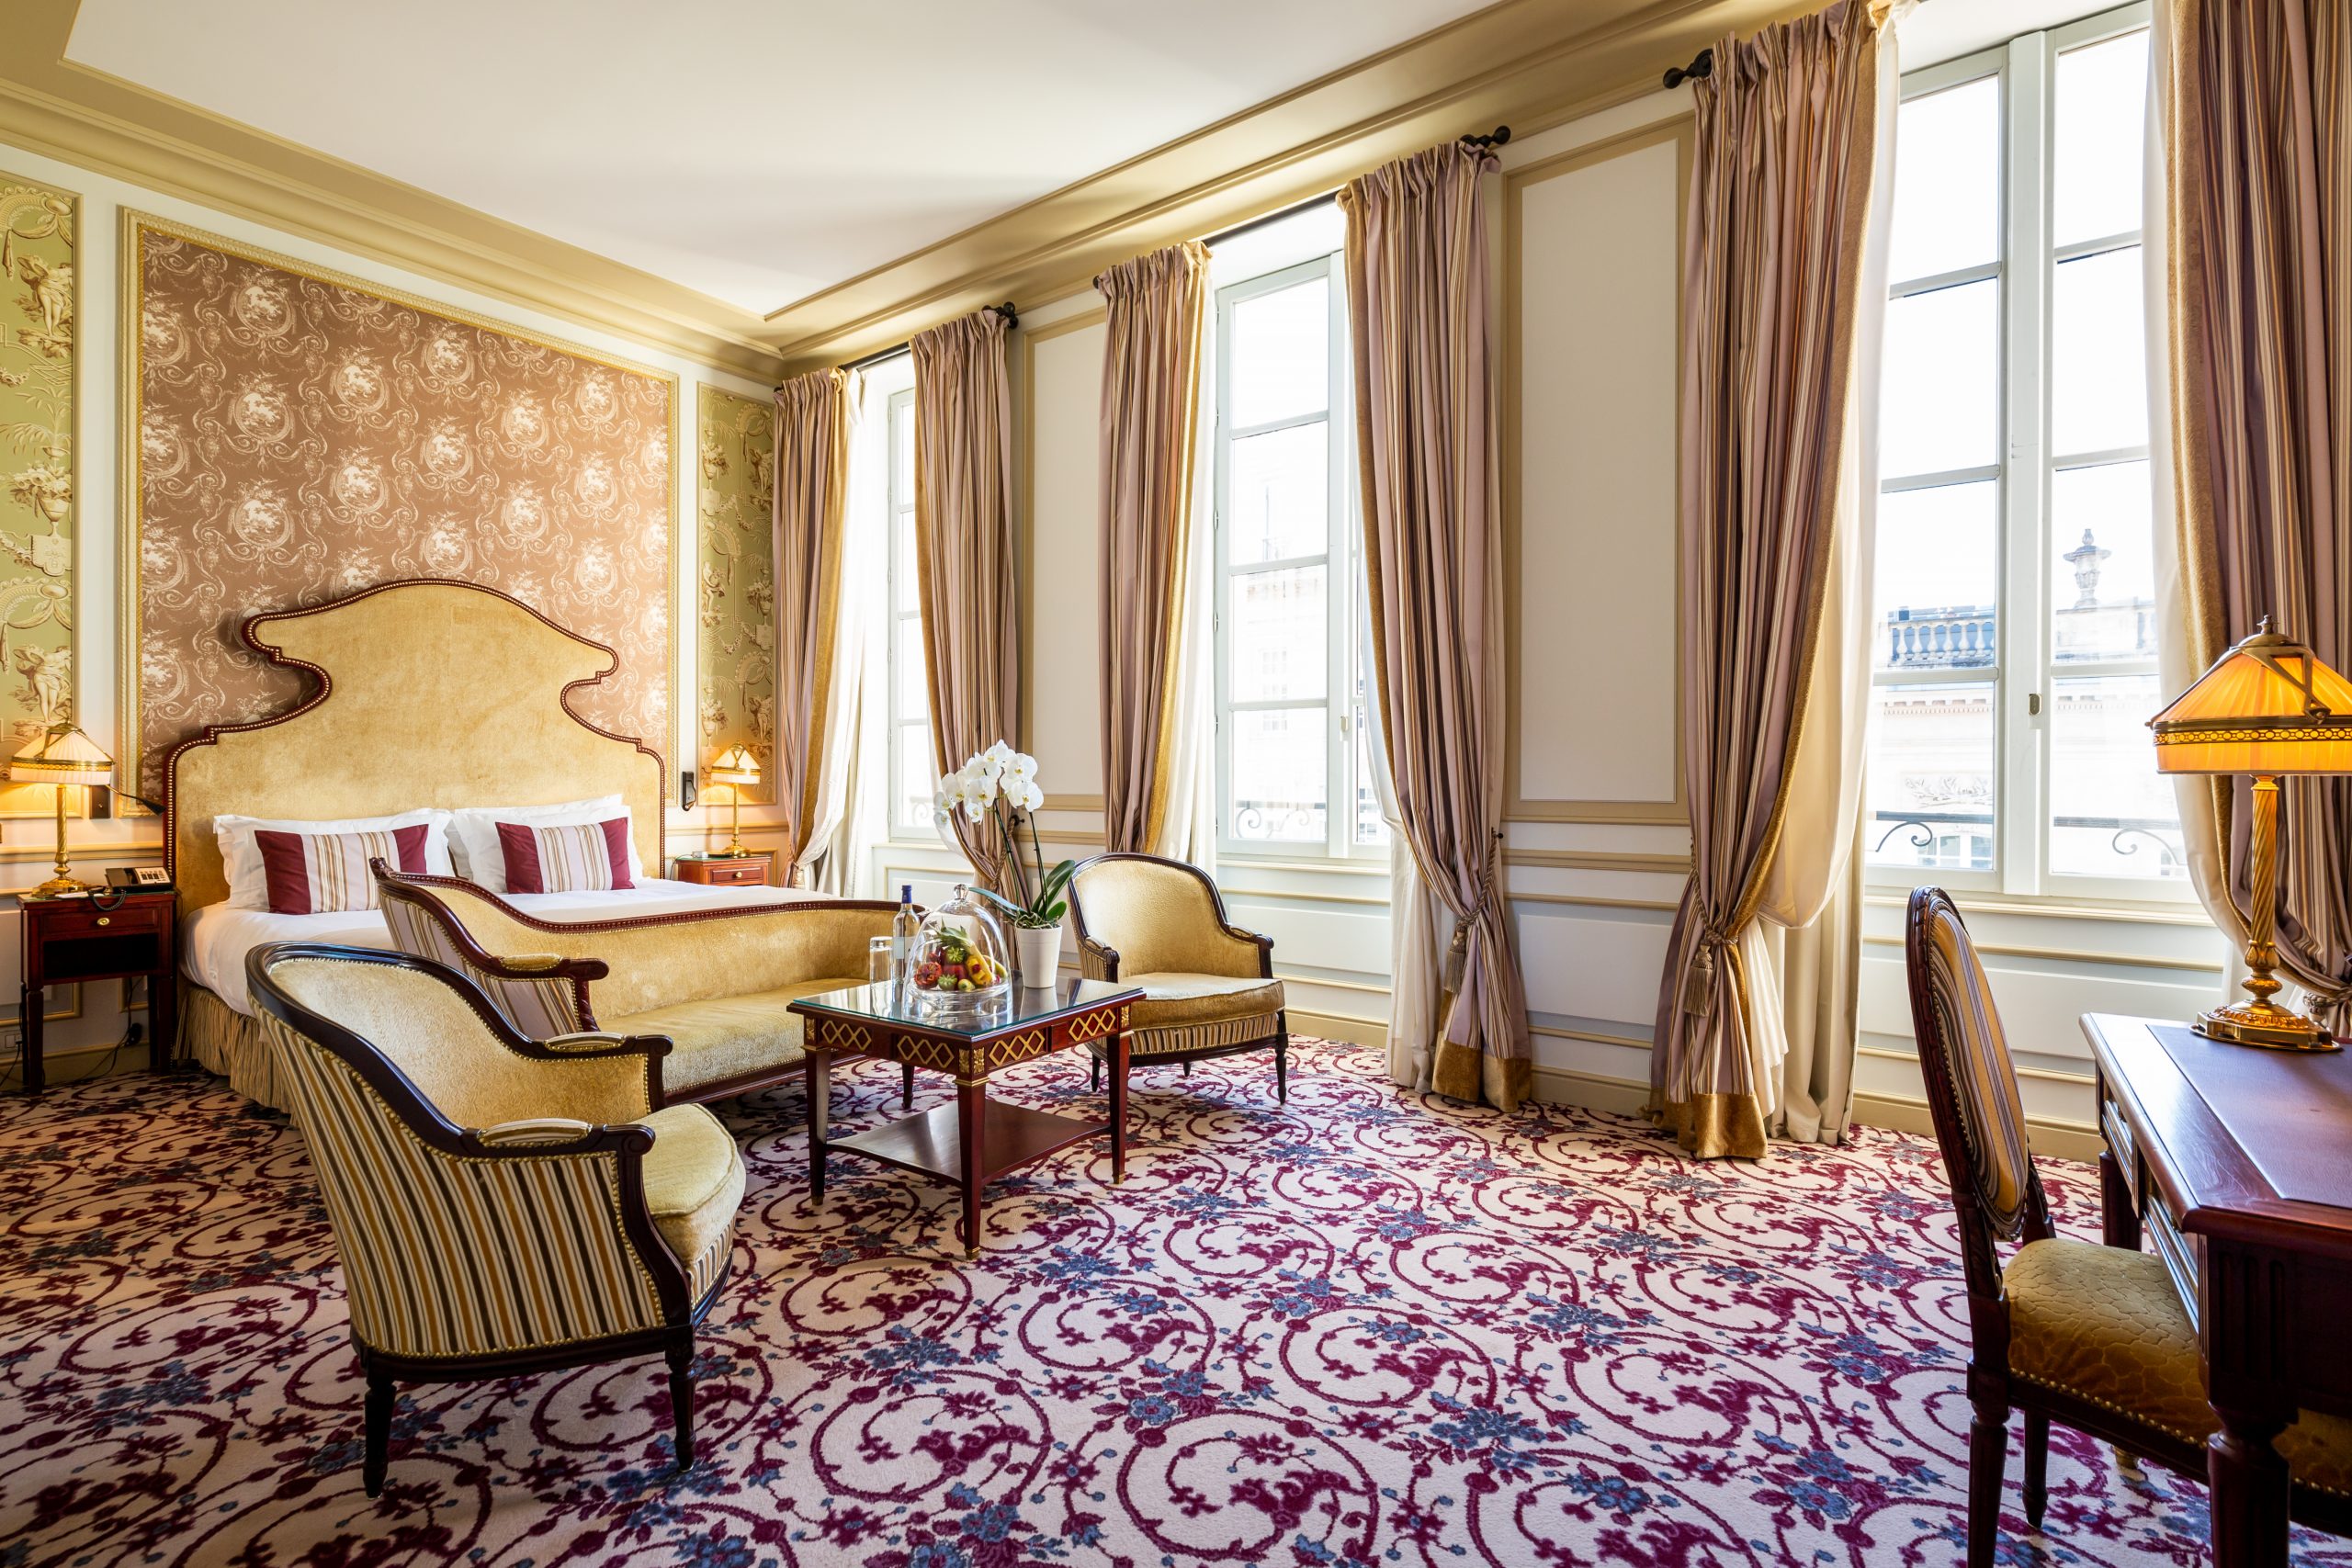 InterContinental Bordeaux - Le Grand Hotel - Junior Suites 3